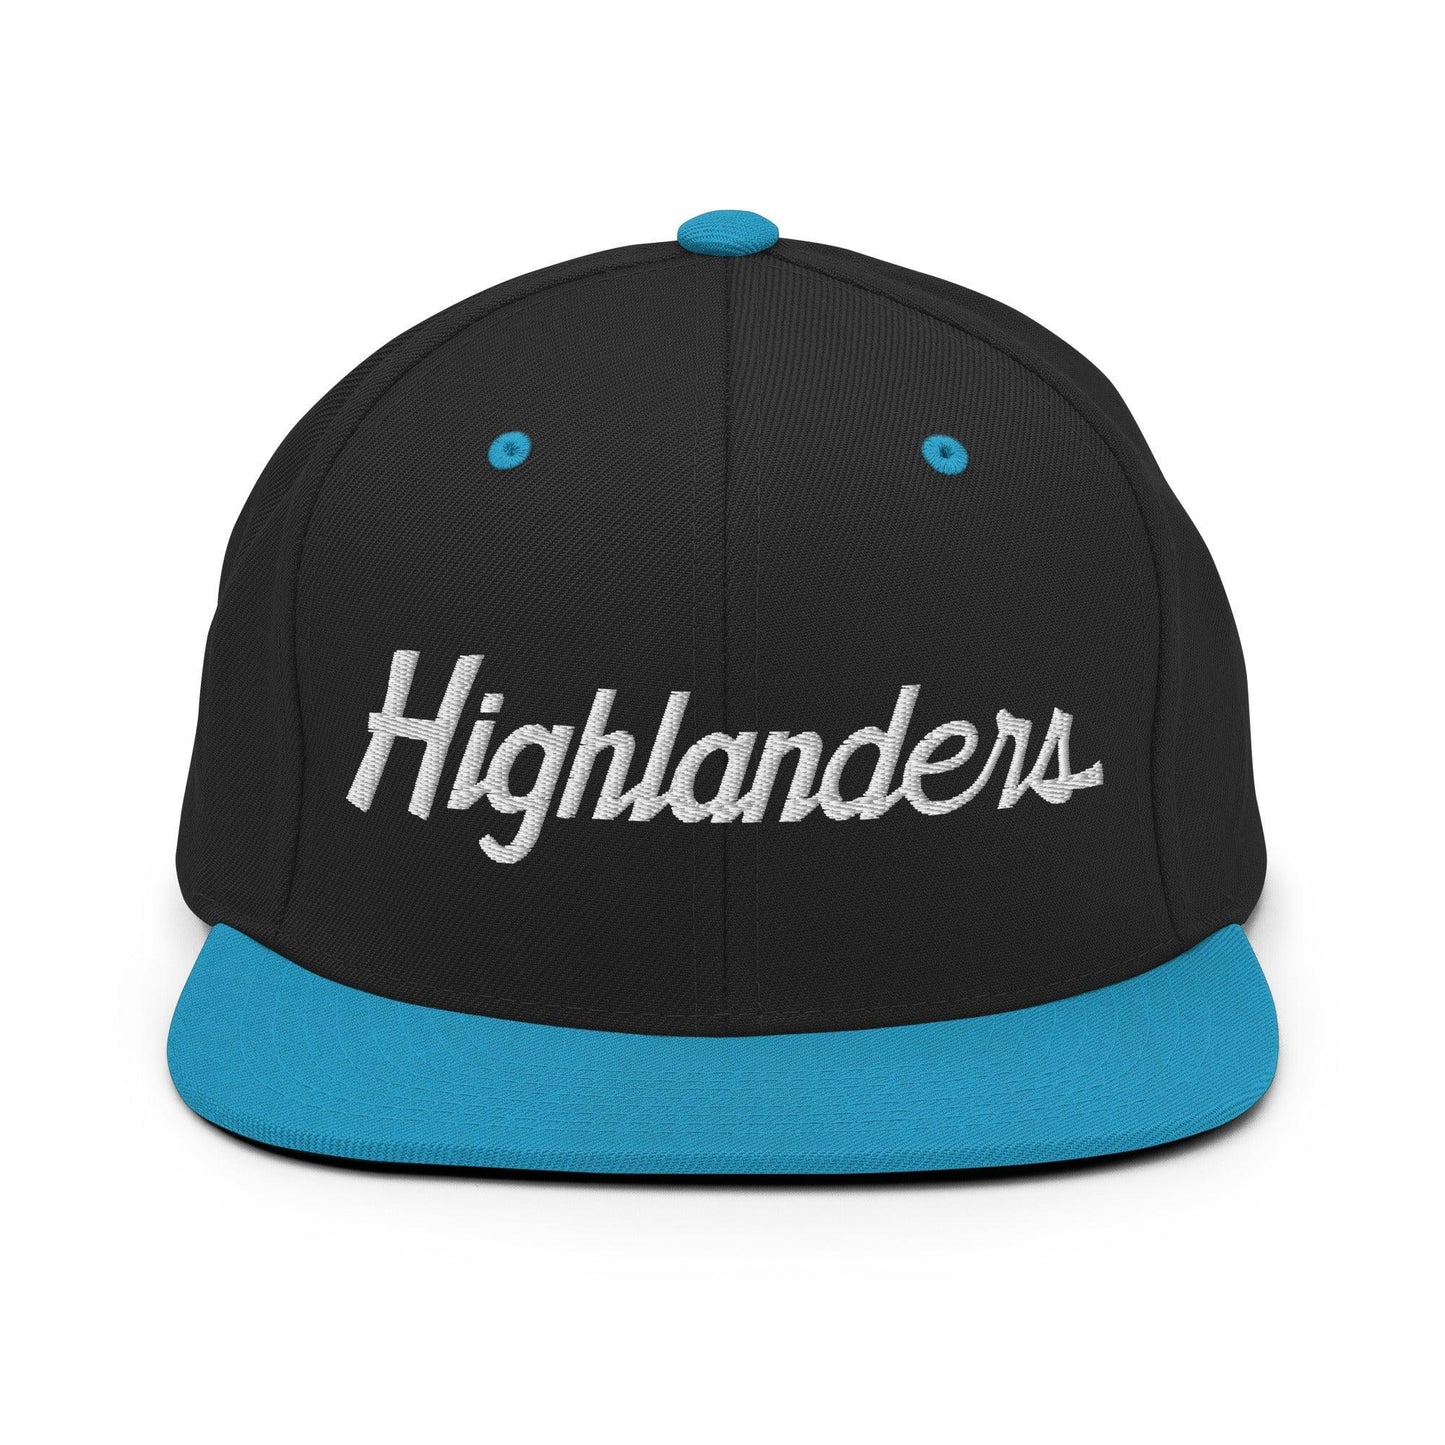 Highlanders School Mascot Script Snapback Hat Black/ Teal